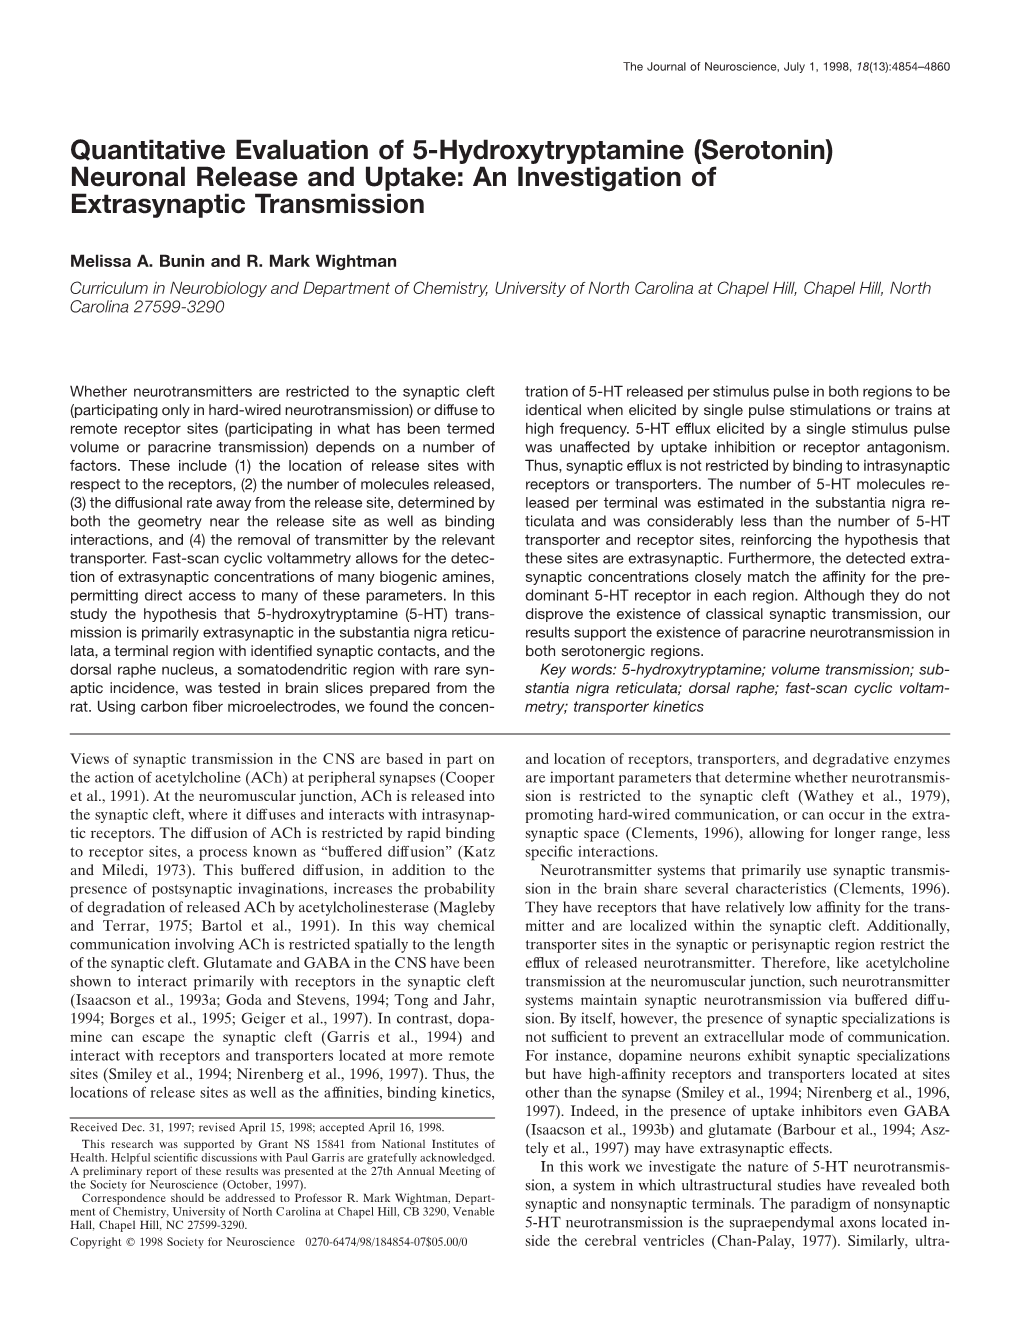 Serotonin) Neuronal Release and Uptake: an Investigation of Extrasynaptic Transmission